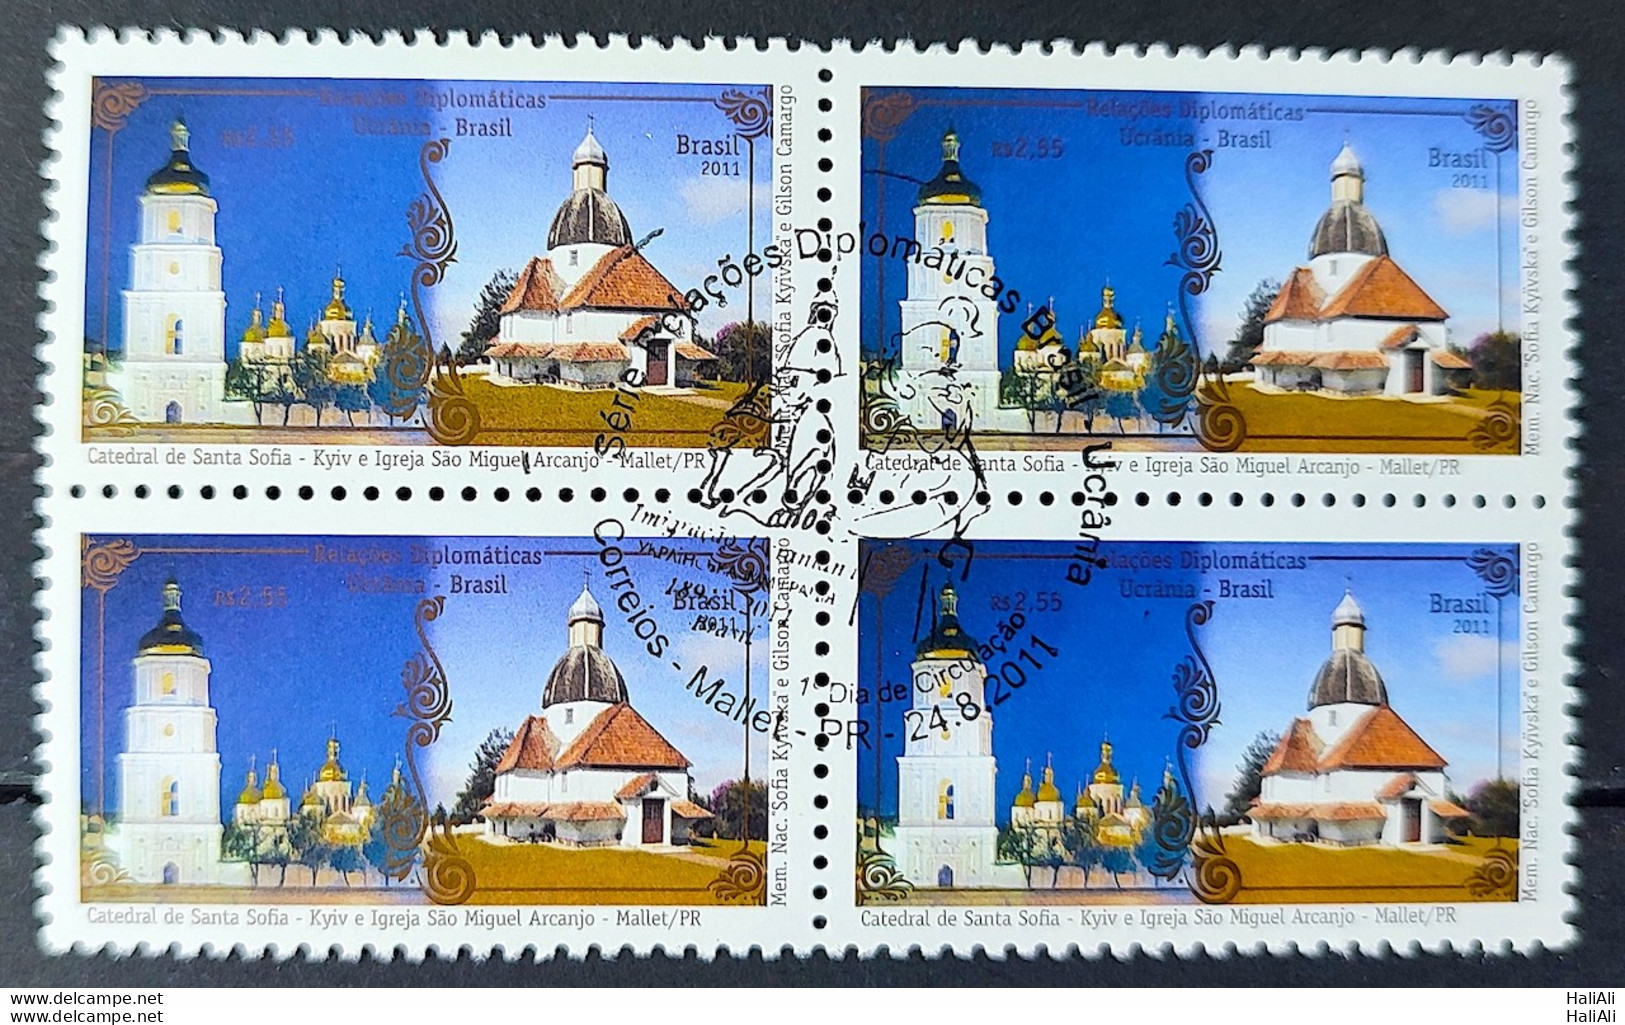 C 3110 Brazil Stamp Diplomatic Relations Ukraine Church Religion 2011 Block Of 4 CBC PR - Unused Stamps